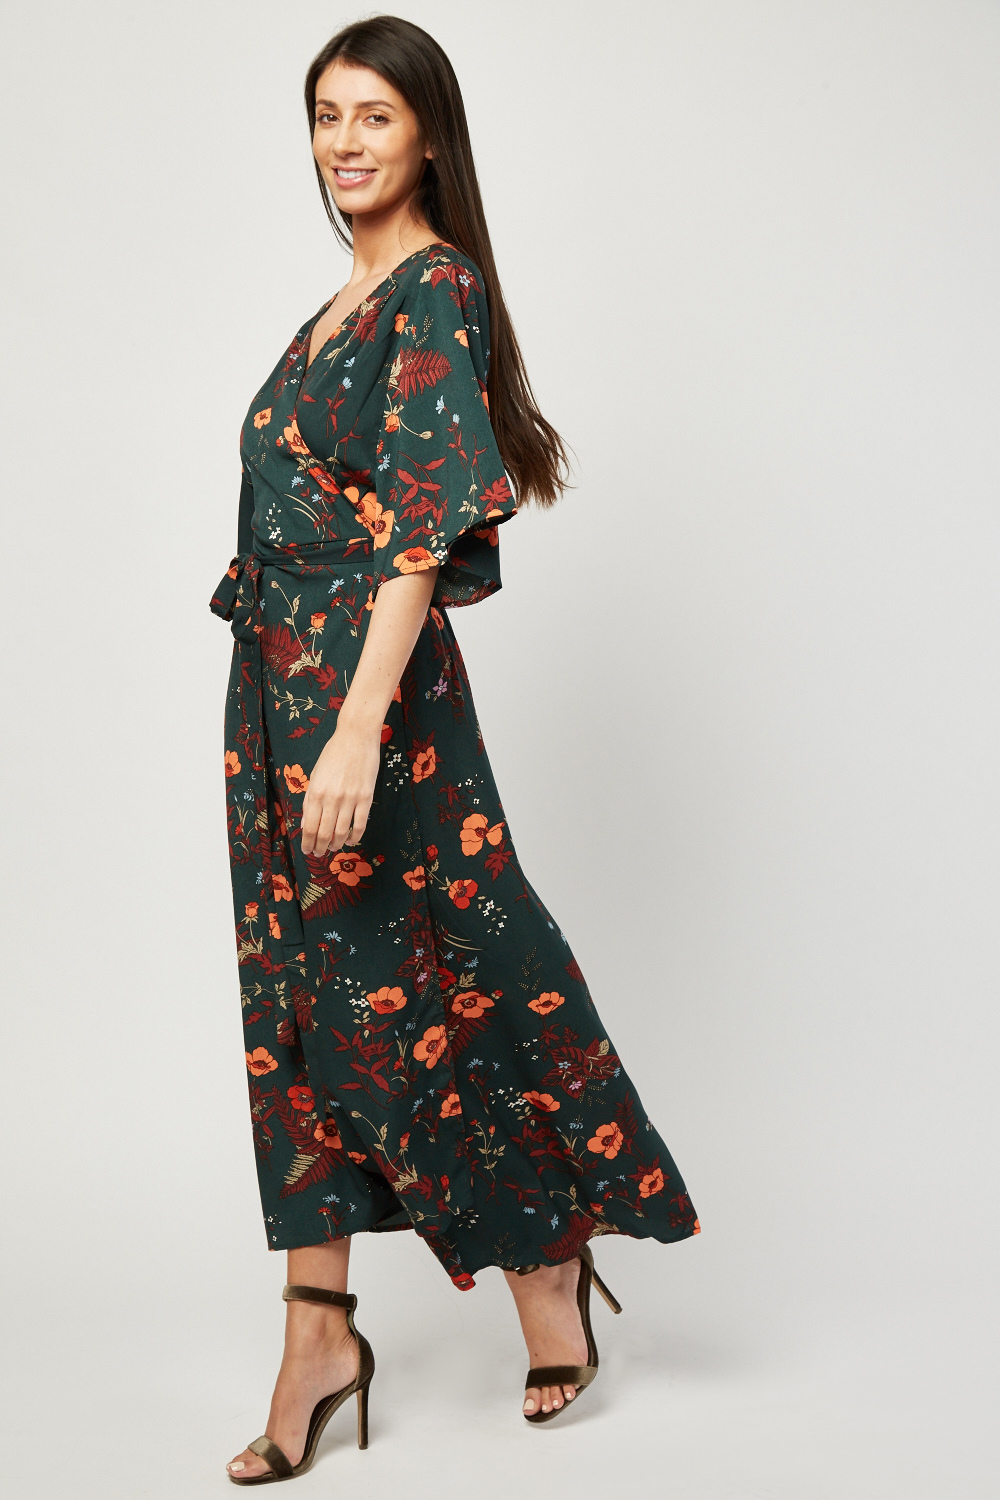 Floral Maxi Wrap Dress - Just $7